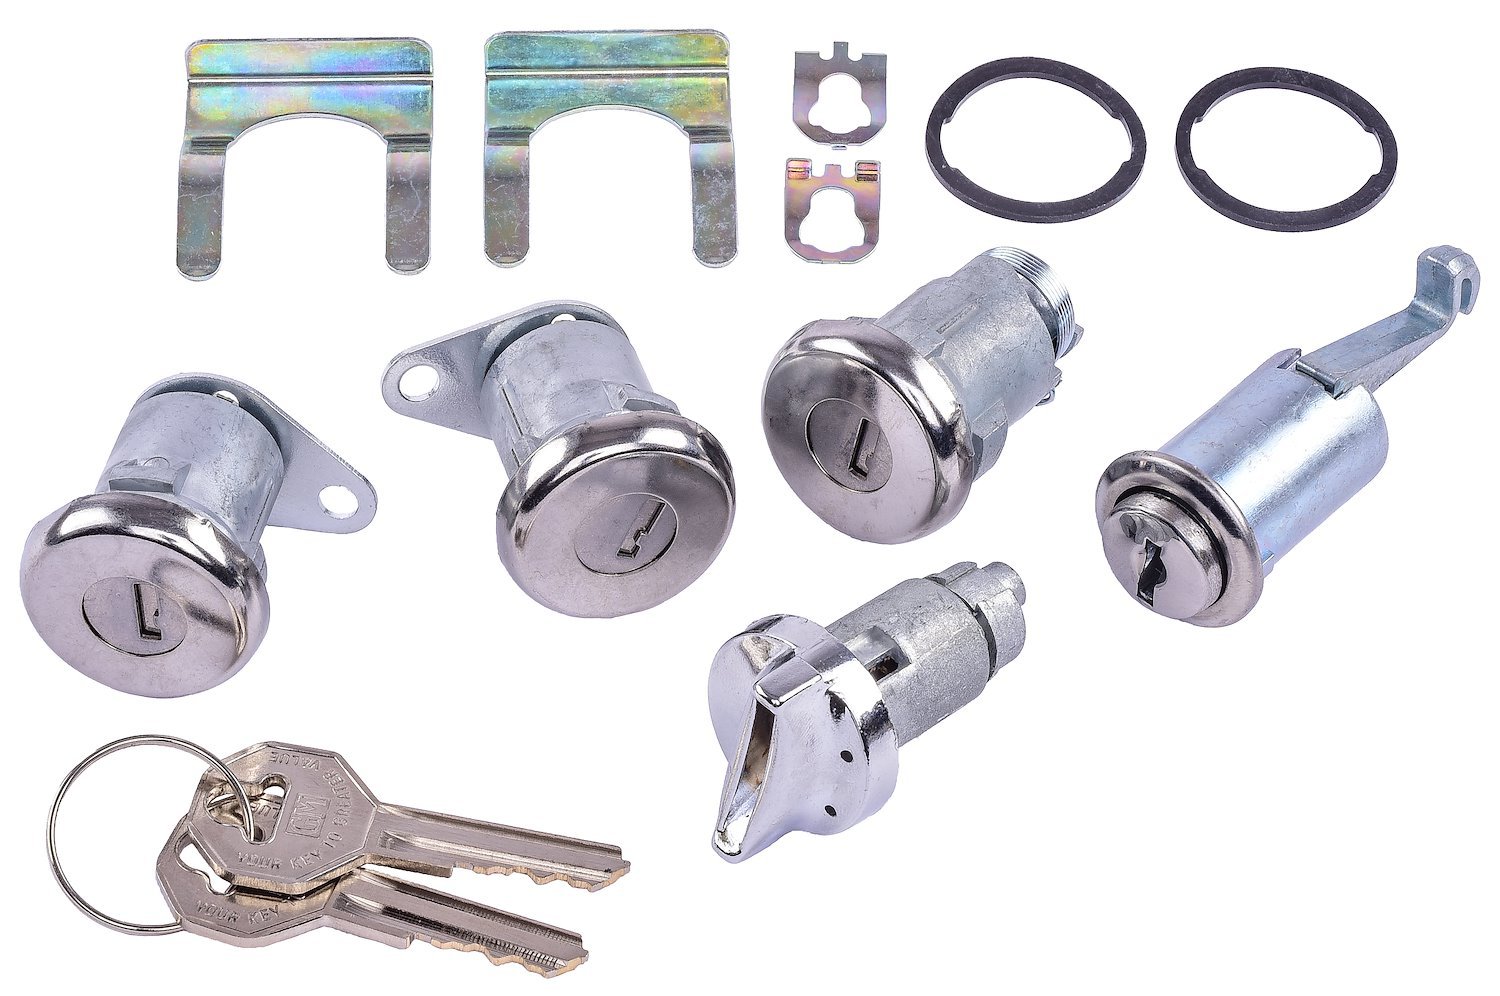 Ignition, Door, Trunk & Glovebox Lock Set Fits Select 1964 GM Models with Short Door Cylinders [Original Octagon]